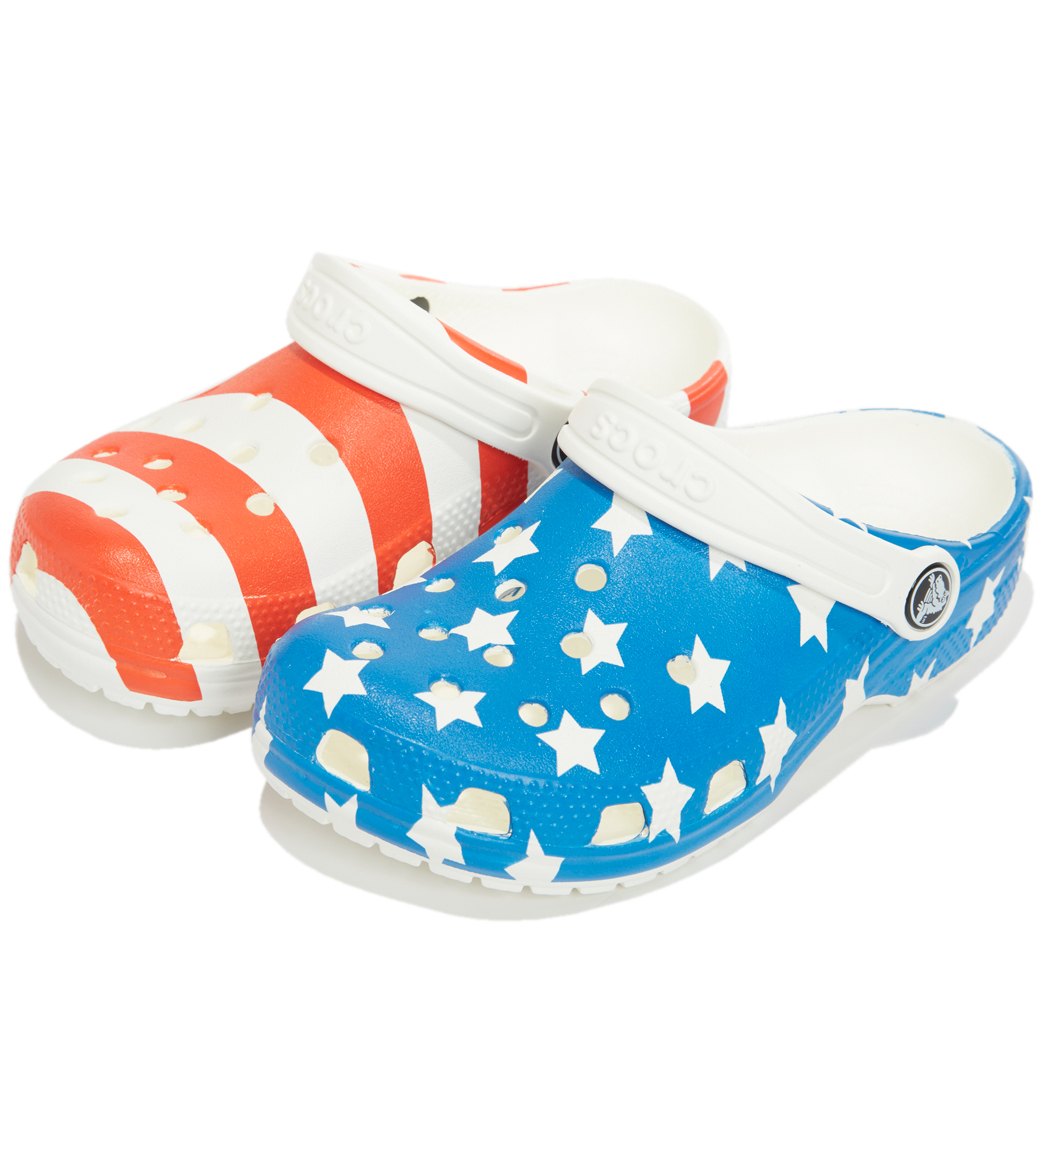 Crocs Kids Classic American Flag Clogs - Red/White/Blue 5 - Swimoutlet.com